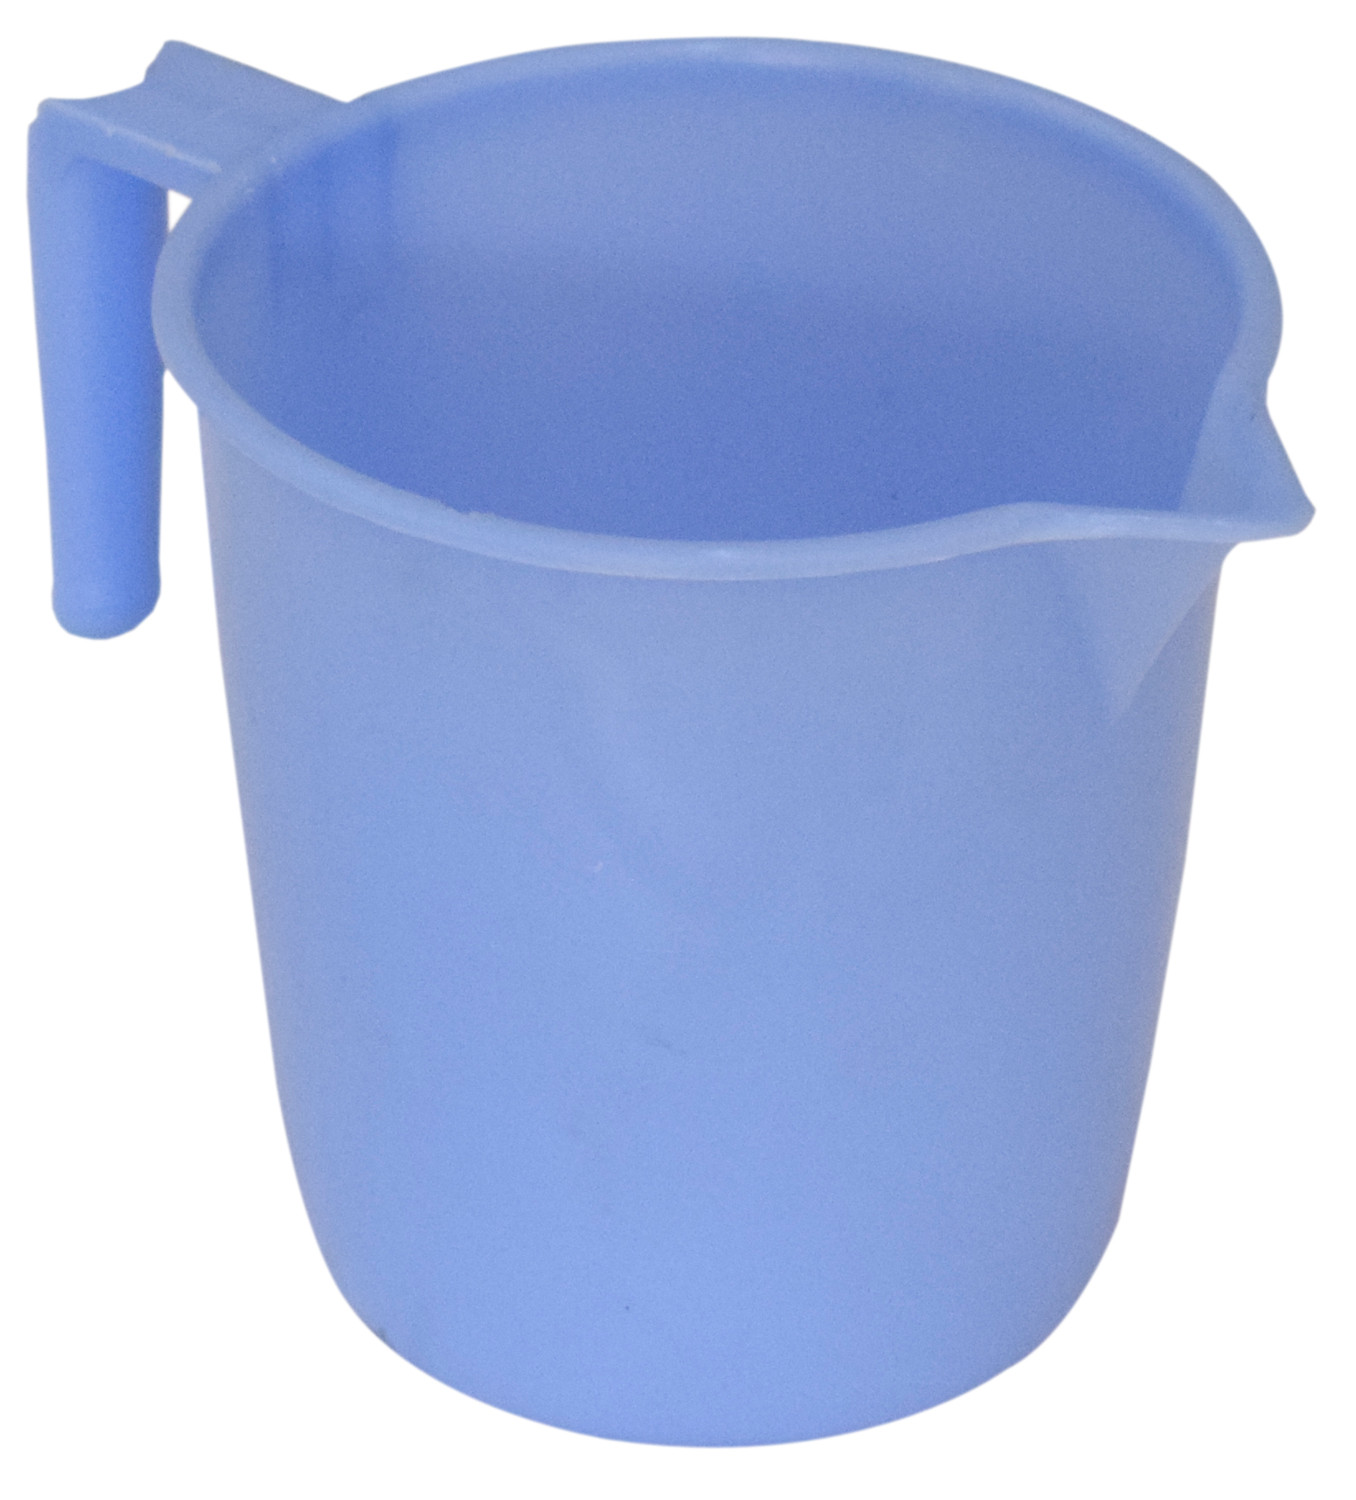 Kuber Industries 2 Pieces Unbreakable Virgin Plastic Multipurpose Bathroom Tub & Mug Set (Blue)